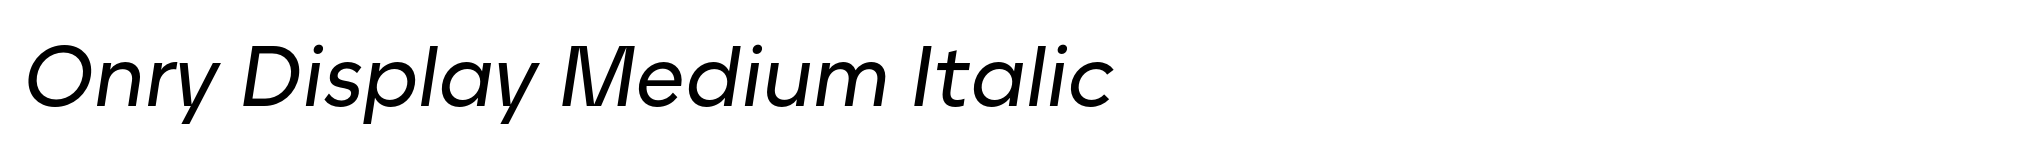 Onry Display Medium Italic image